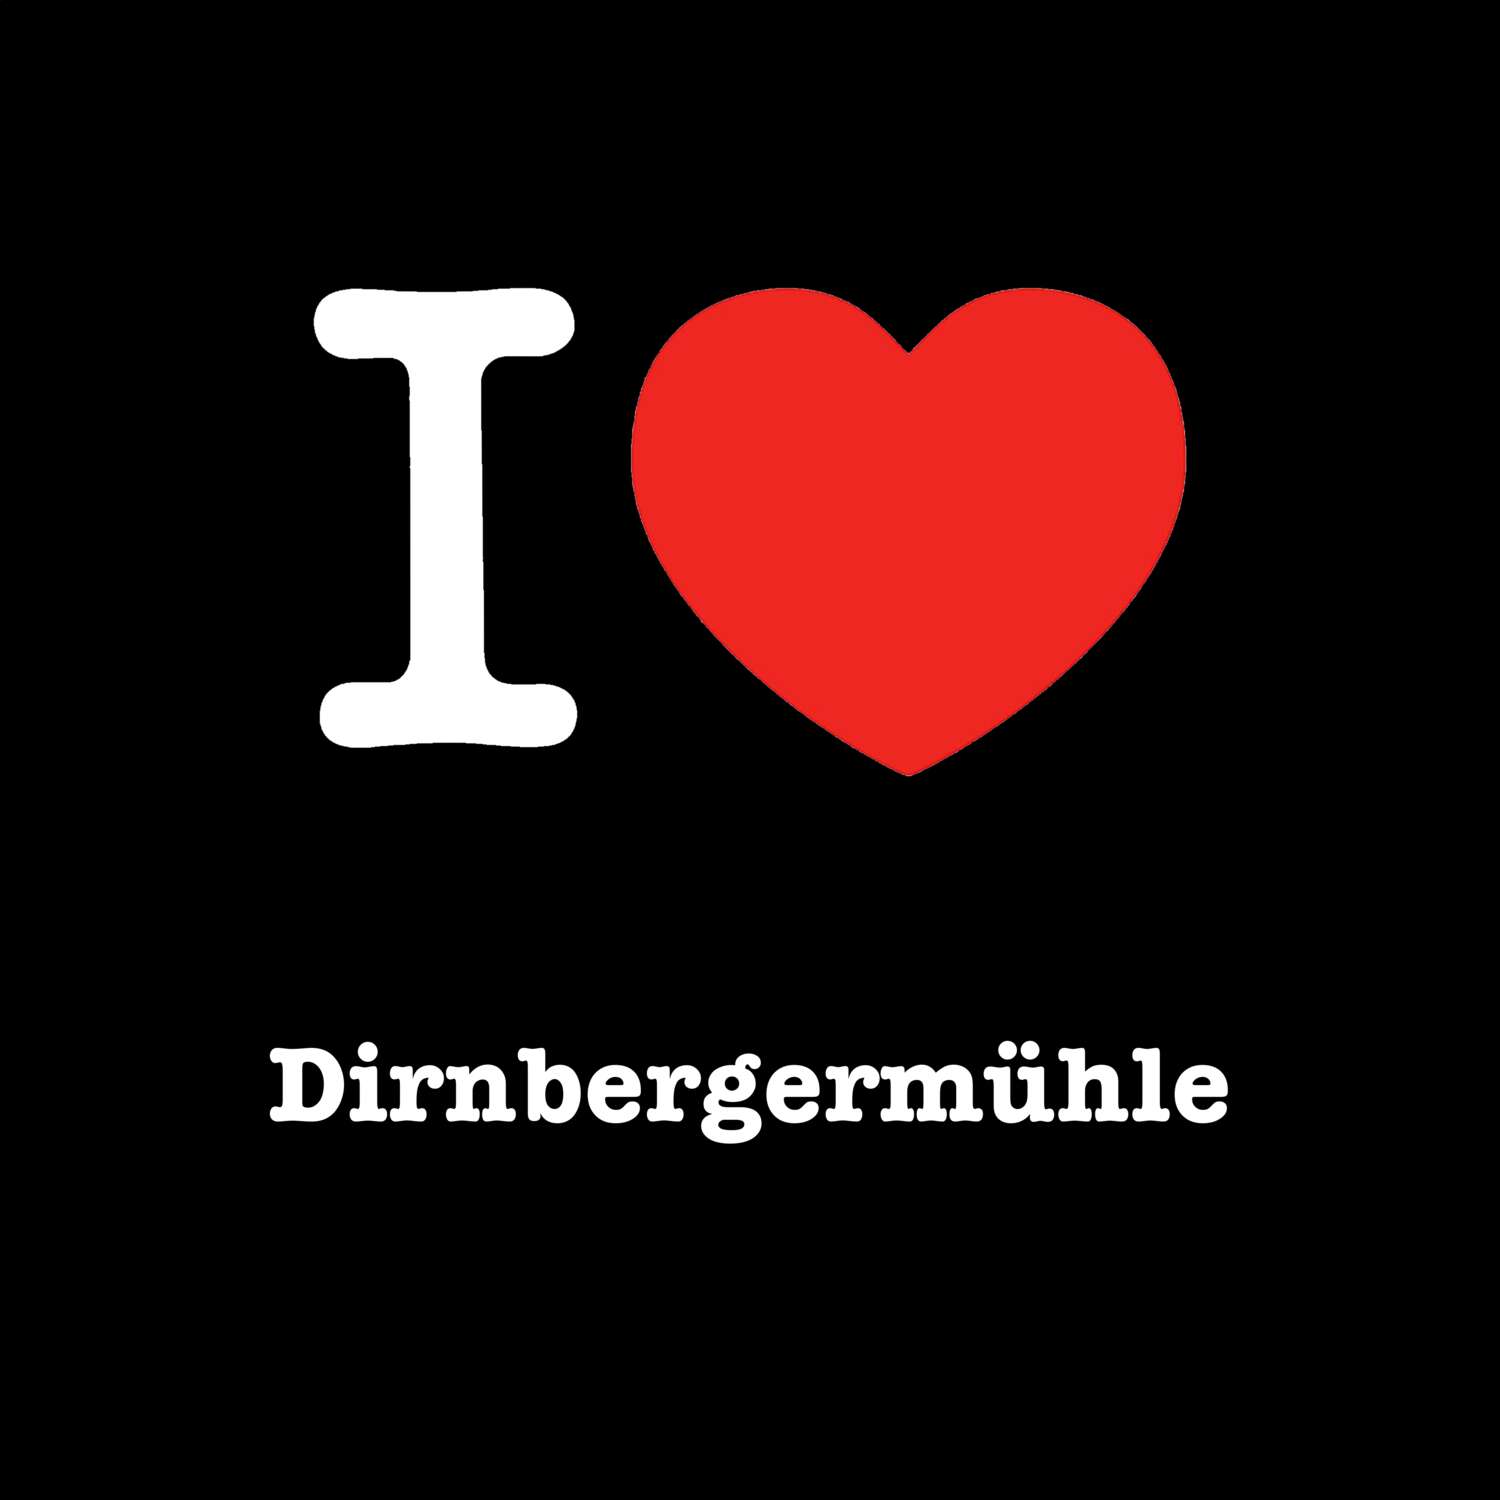 Dirnbergermühle T-Shirt »I love«